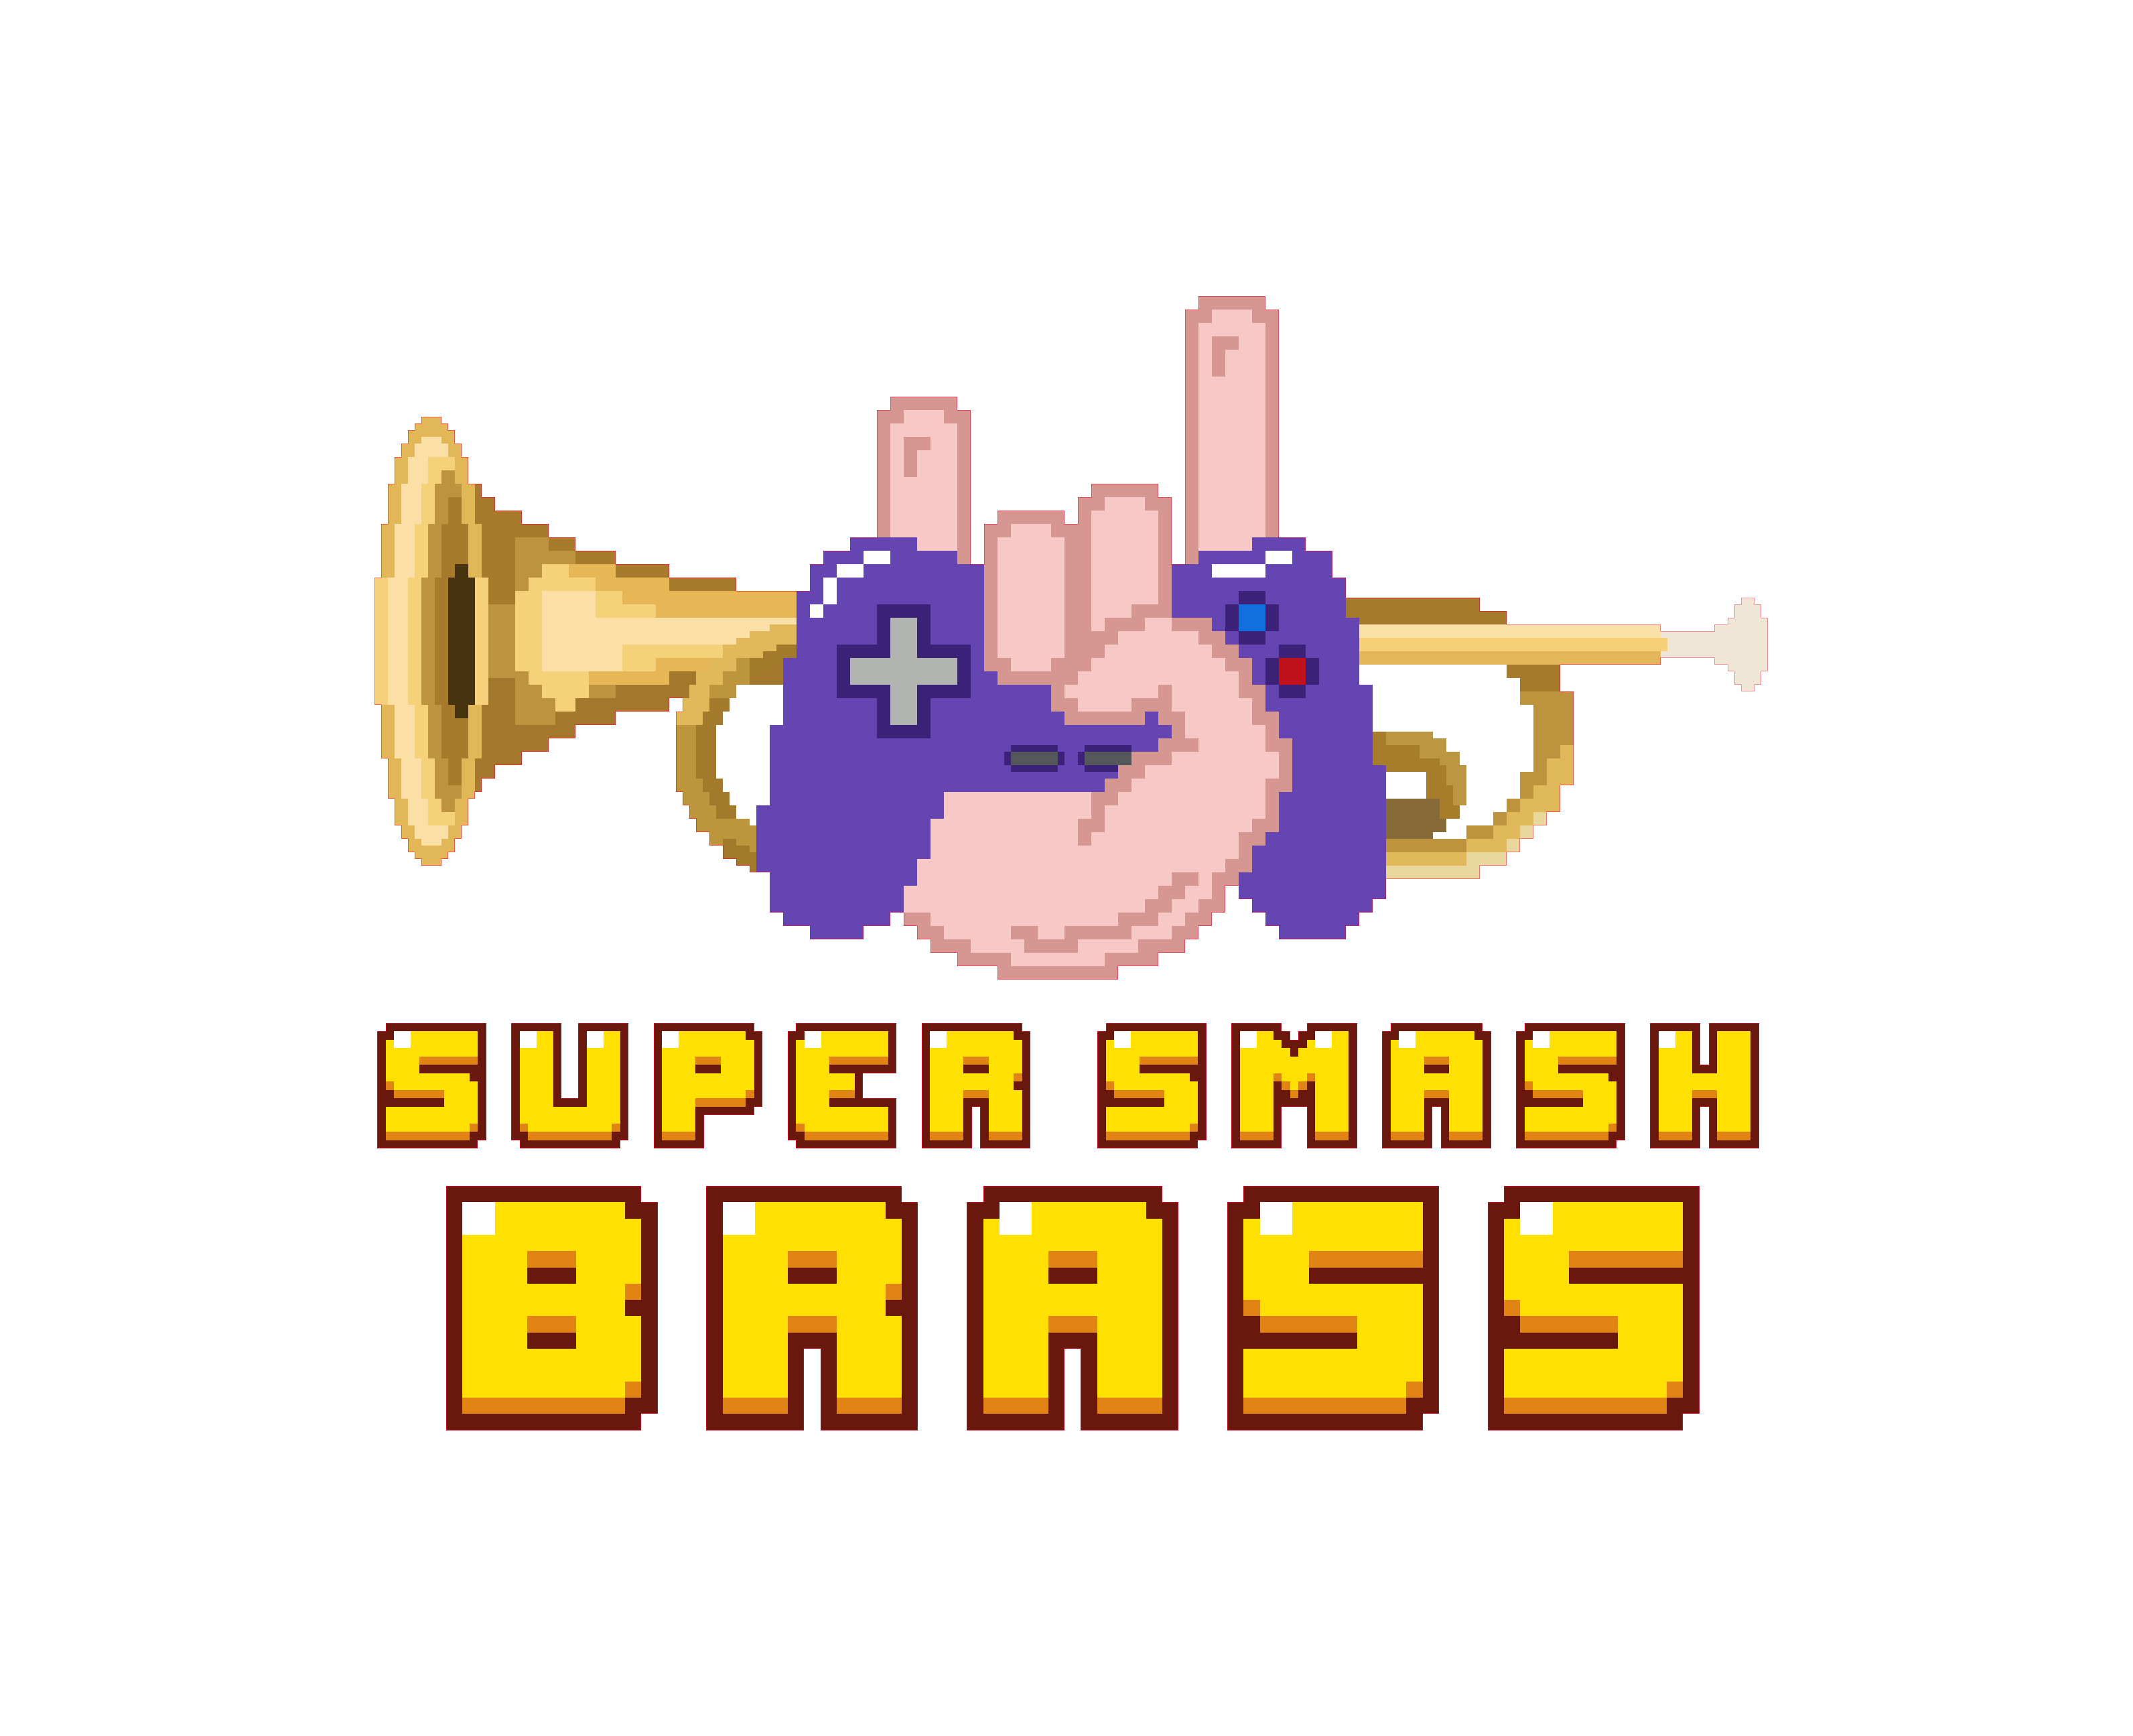 Super Smash Brass